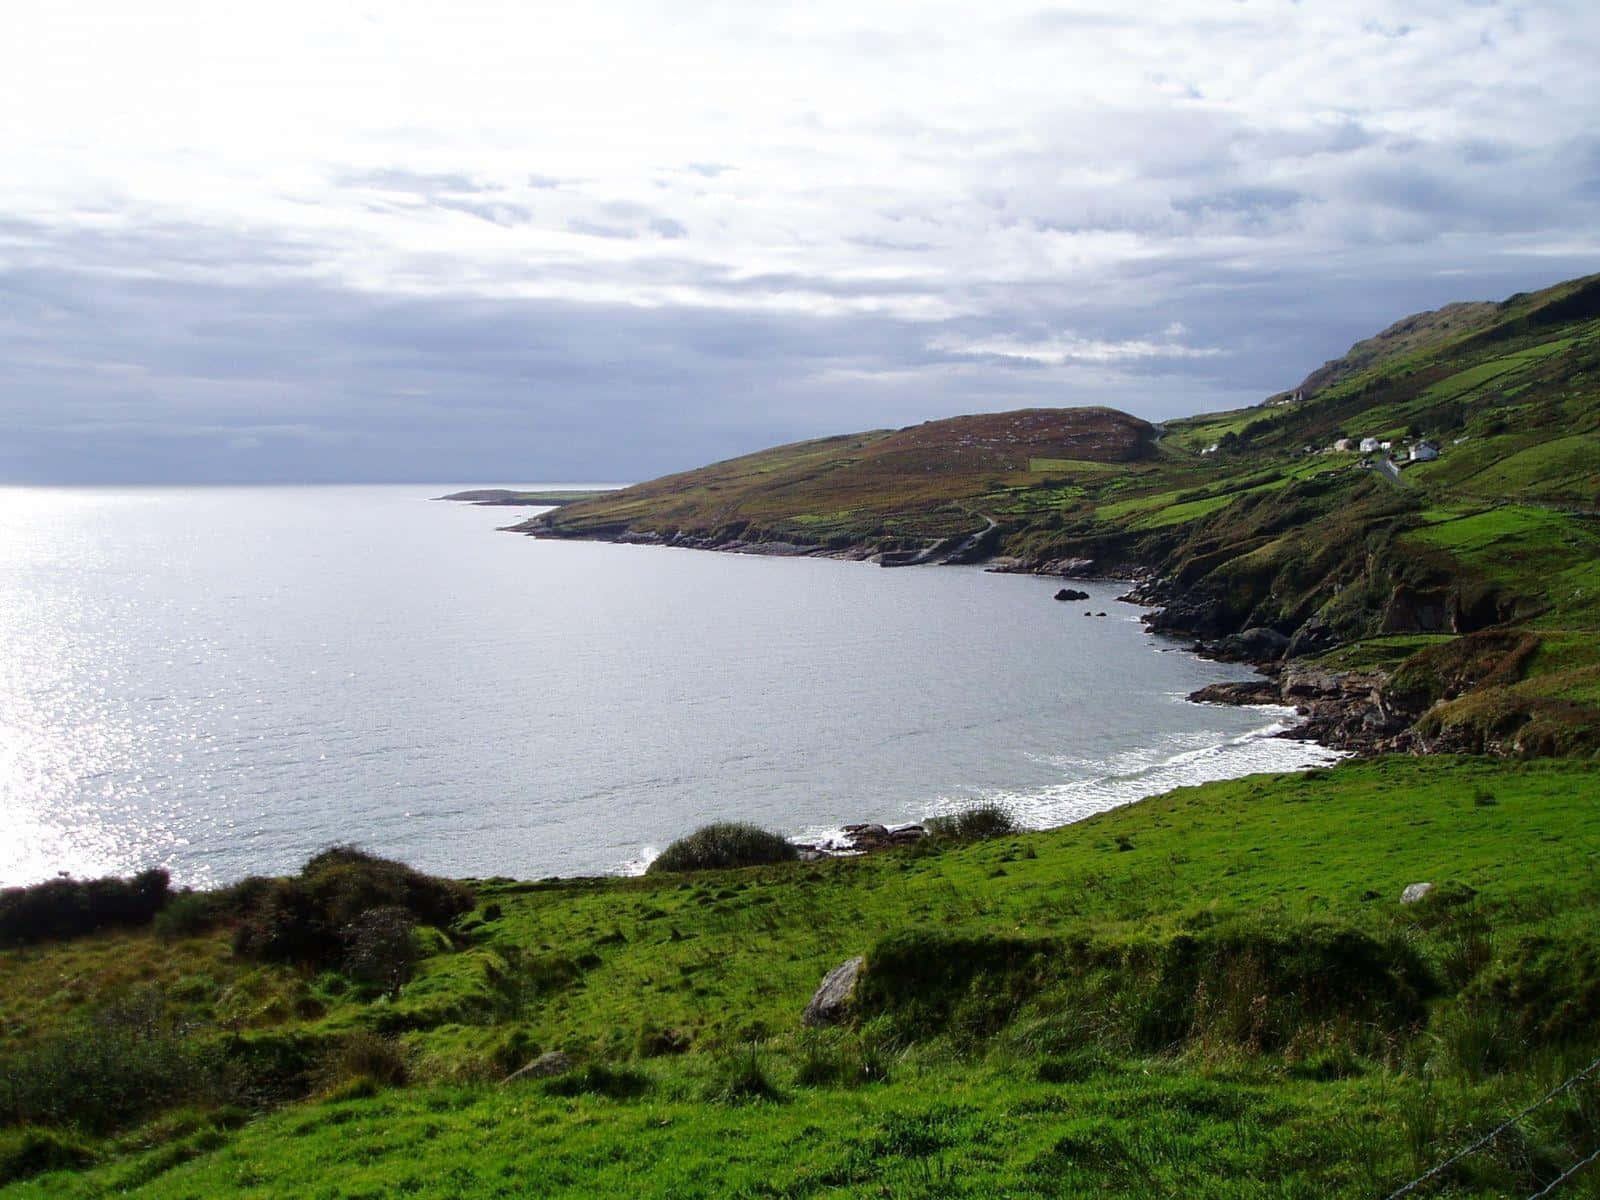 Breathtaking landscape of the Irish countryside